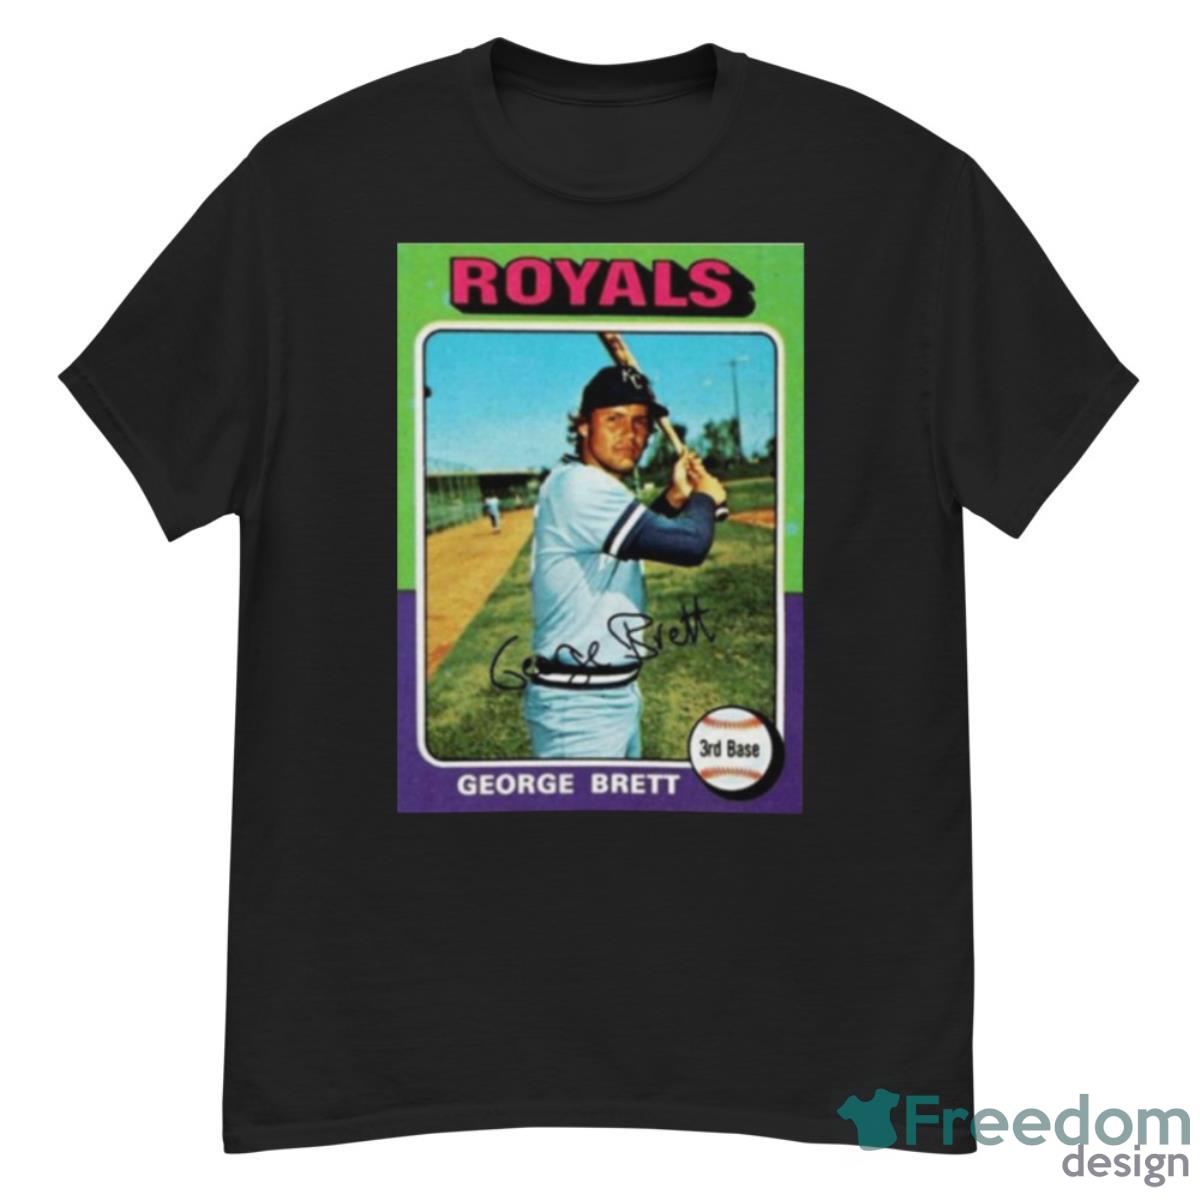 Royals George Brett 3rd Base Shirt - Freedomdesign